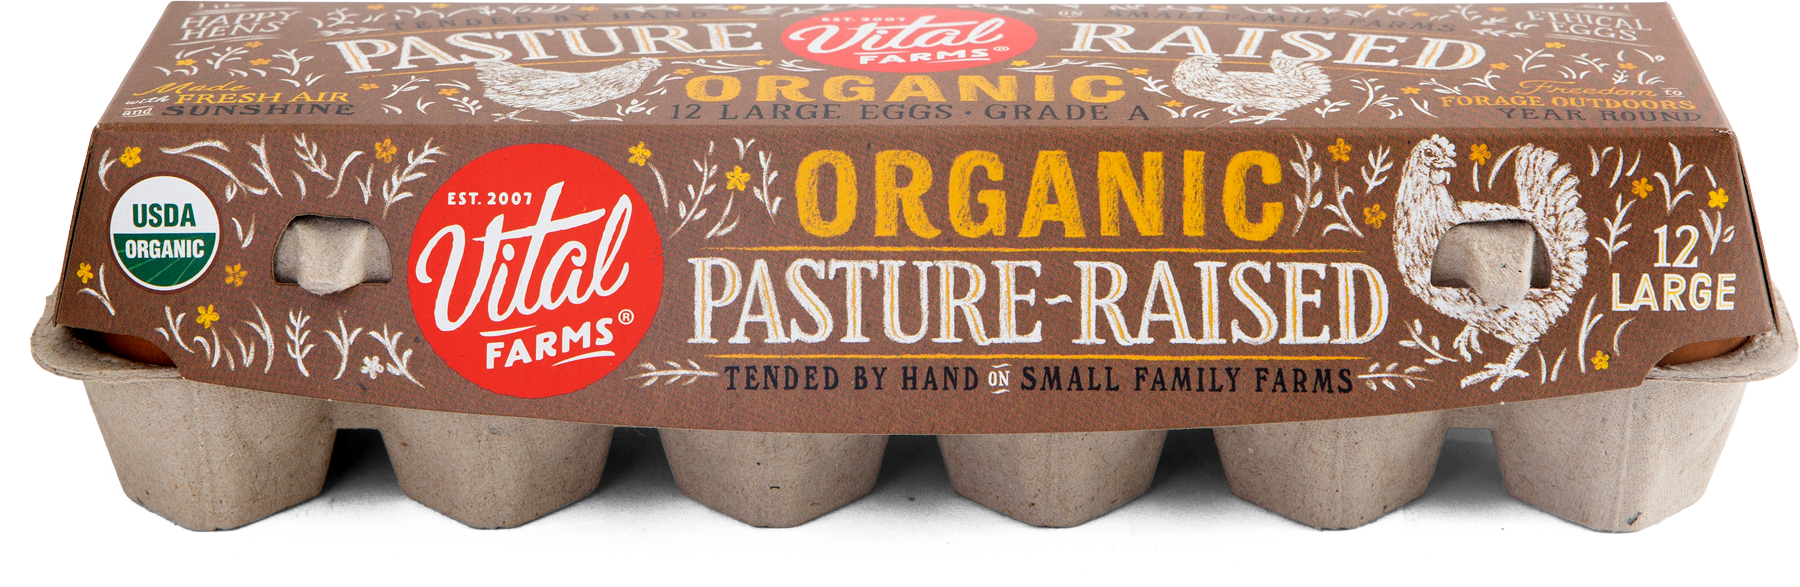 Organic Pasture Raised Eggs (Large), 1.5 dozen, Vital Farms